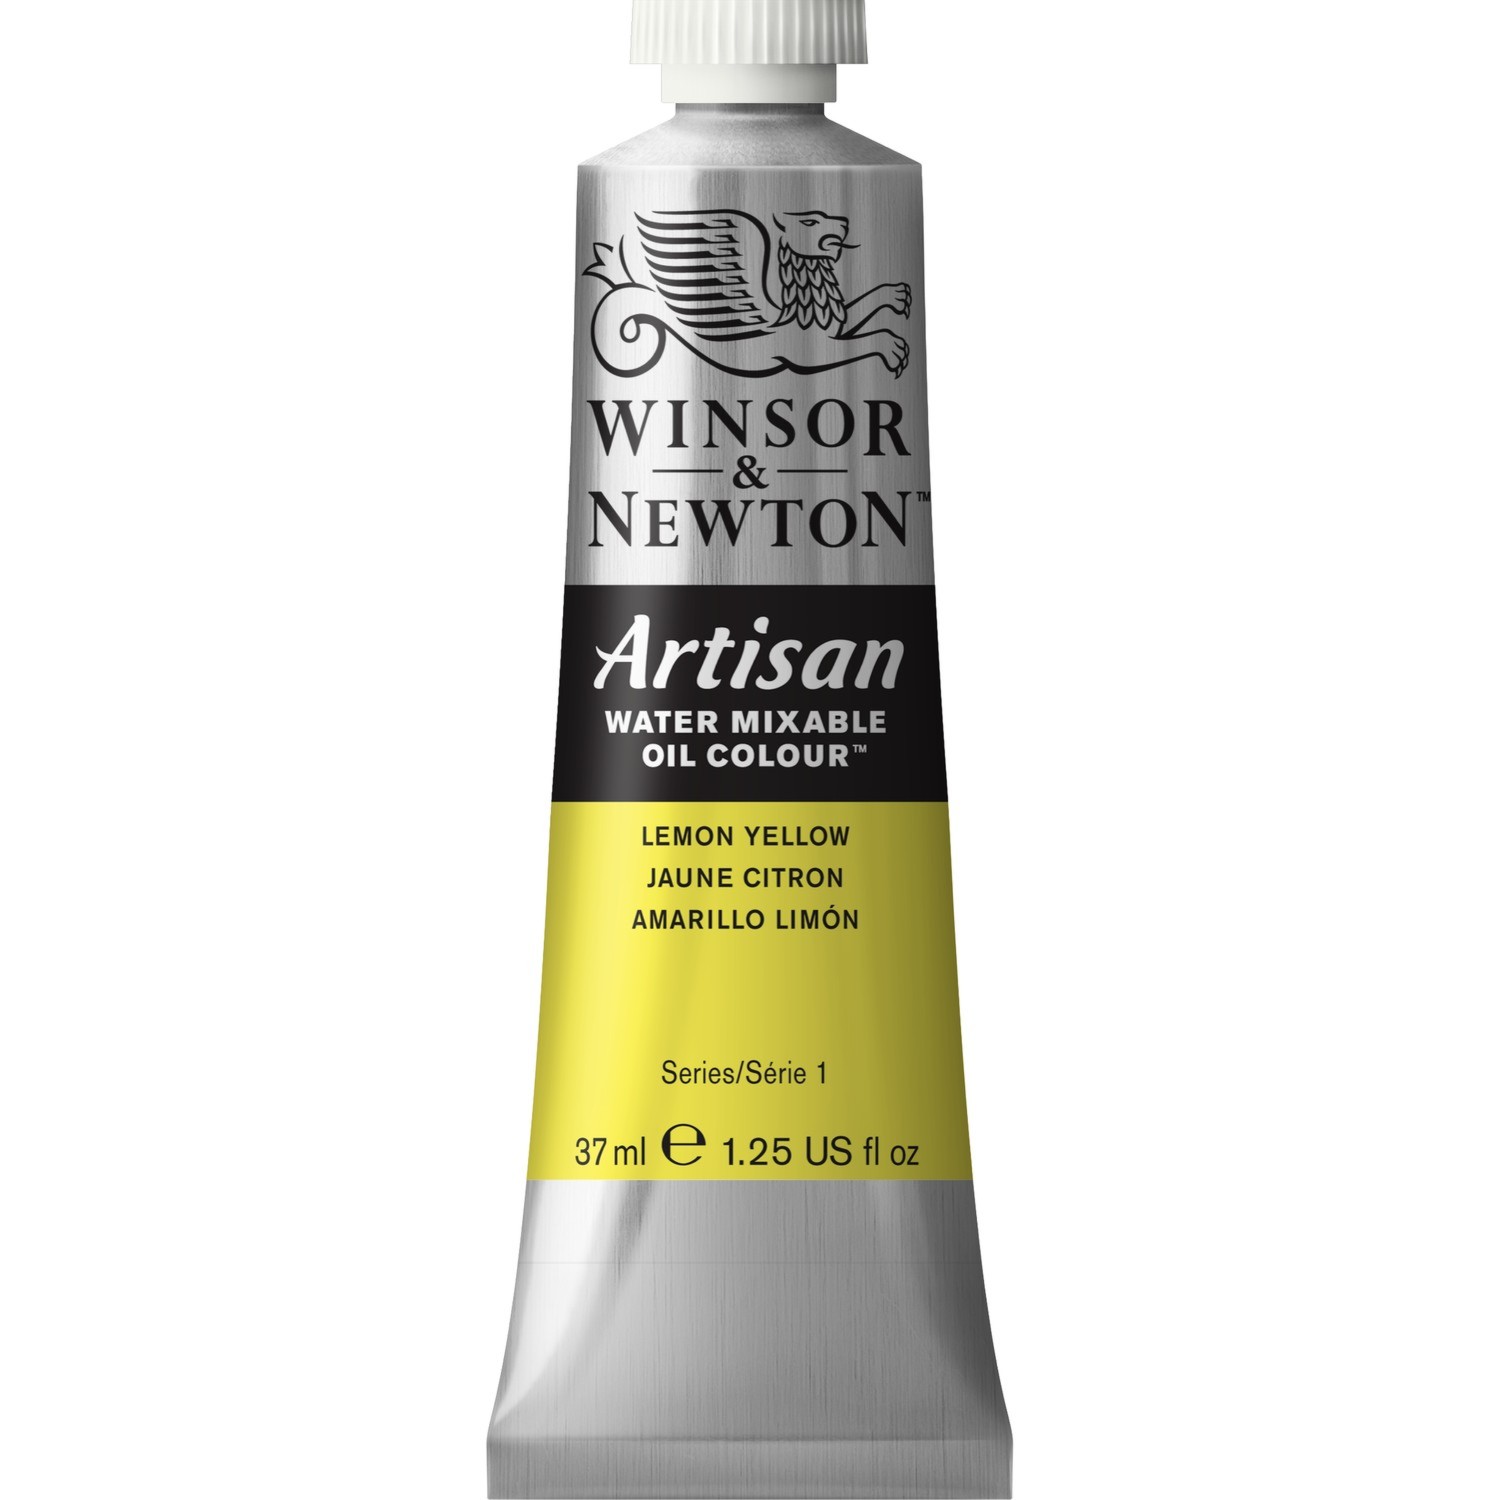 Winsor and Newton 37ml Artisan Mixable Oil Paint - Lemon Yellow Image 1